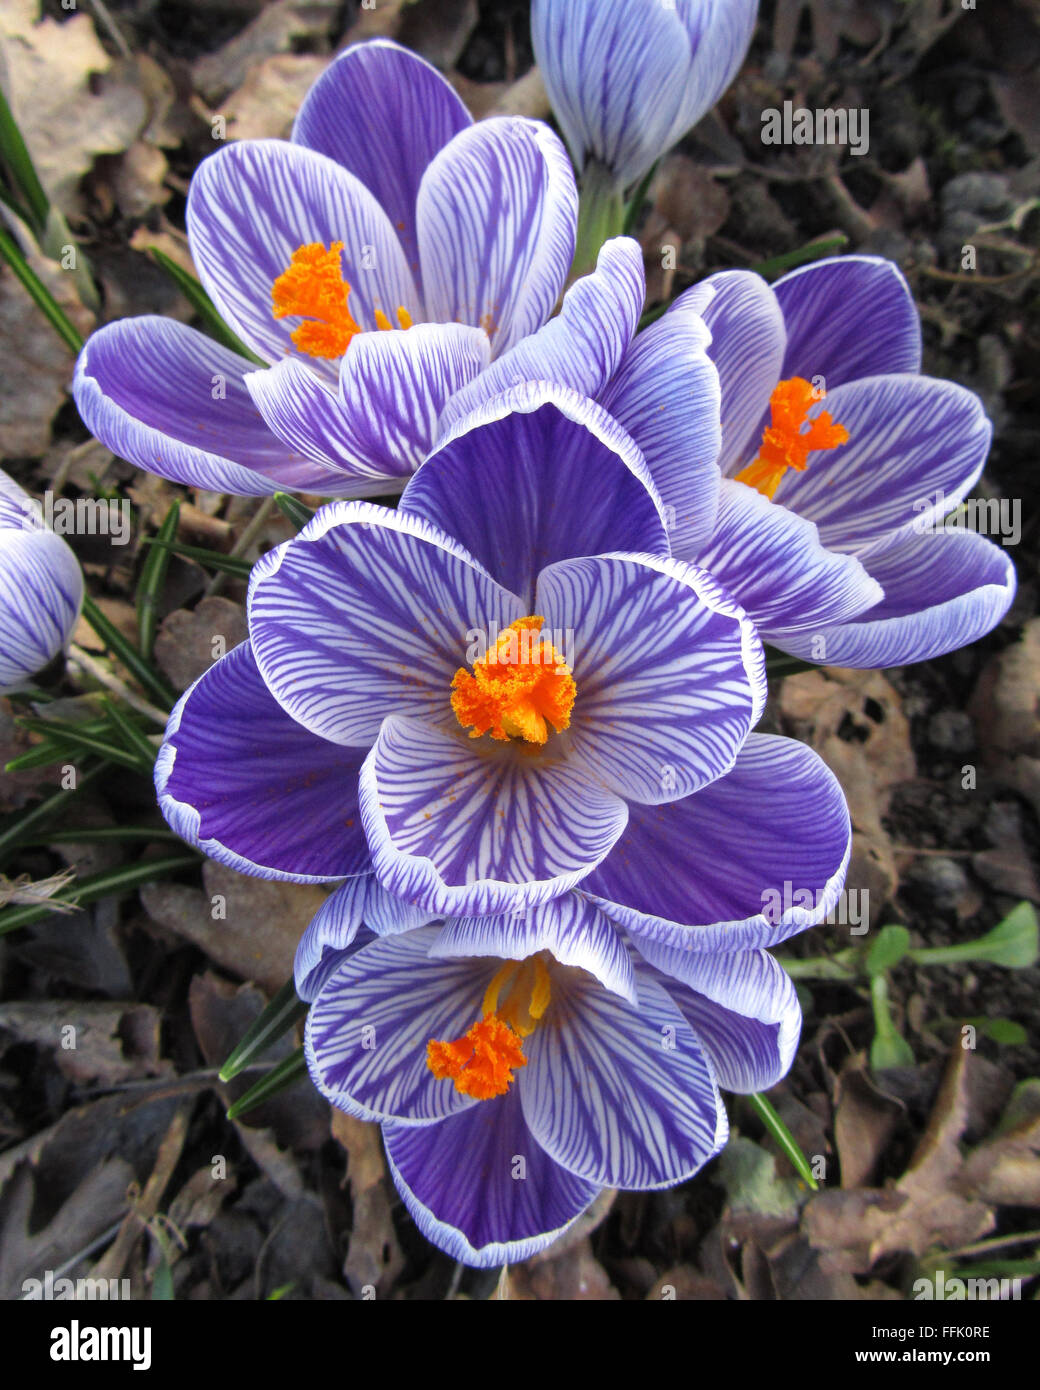 Purple Striped Crocus: The beautiful spring flowering bulb Crocus sativa, in a natural setting. Stock Photo